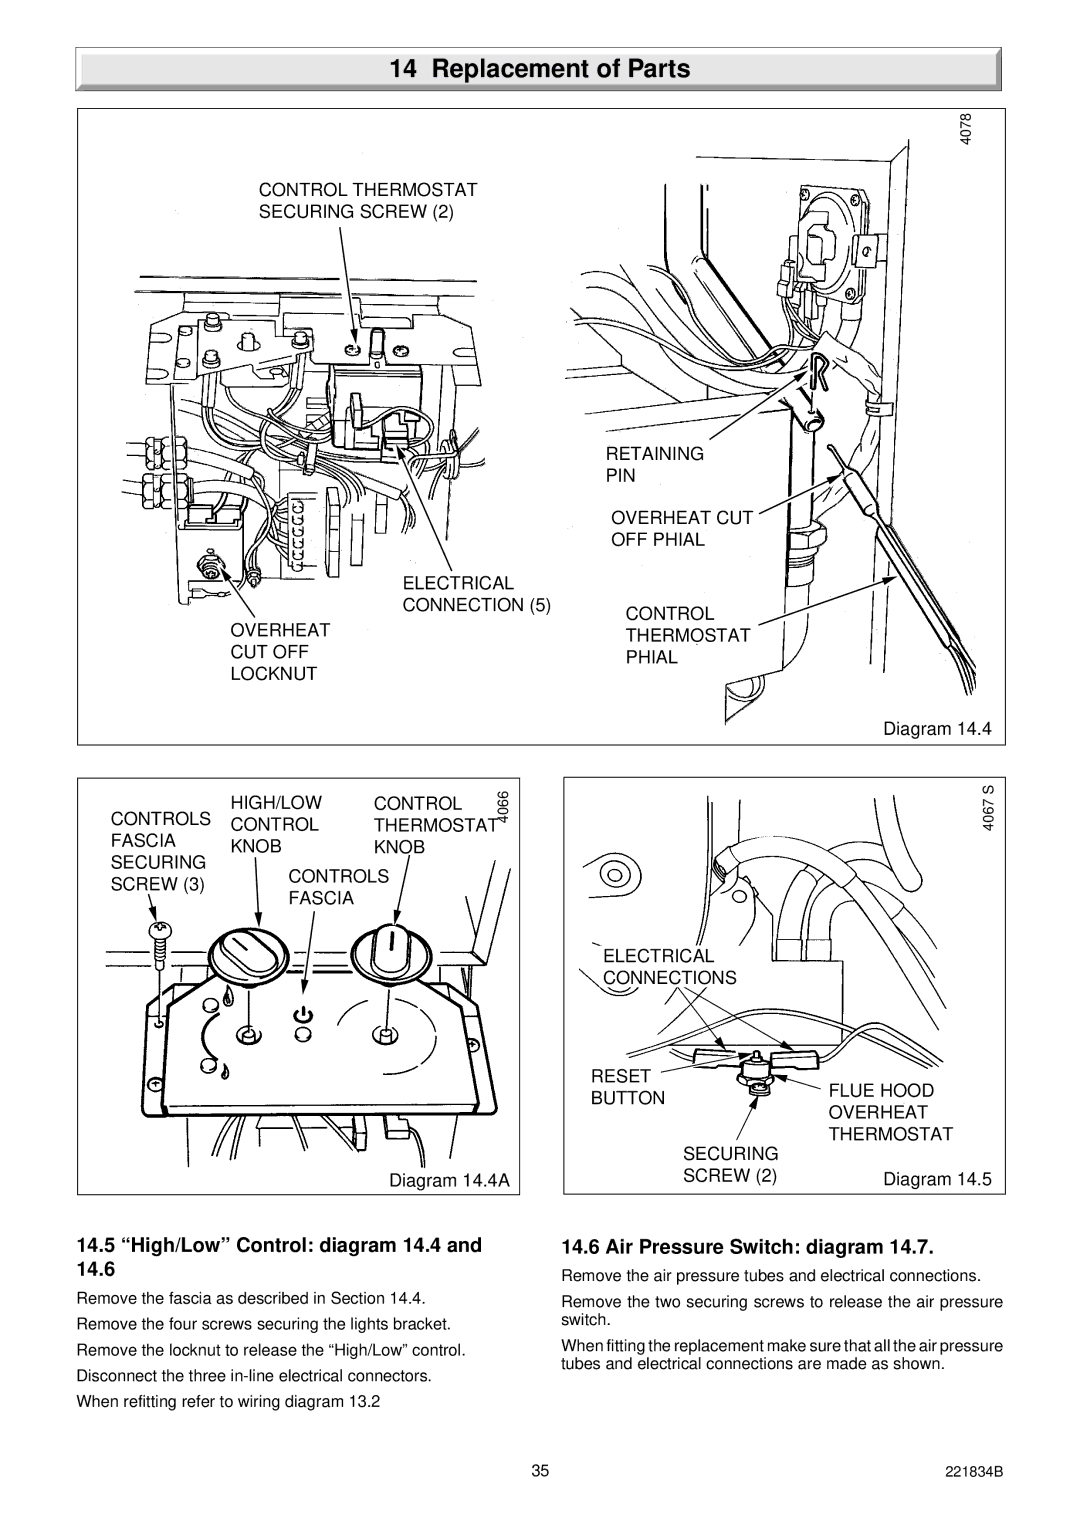 Glowworm Lighting 40 manual High/Low Control diagram 14.4, Air Pressure Switch diagram 